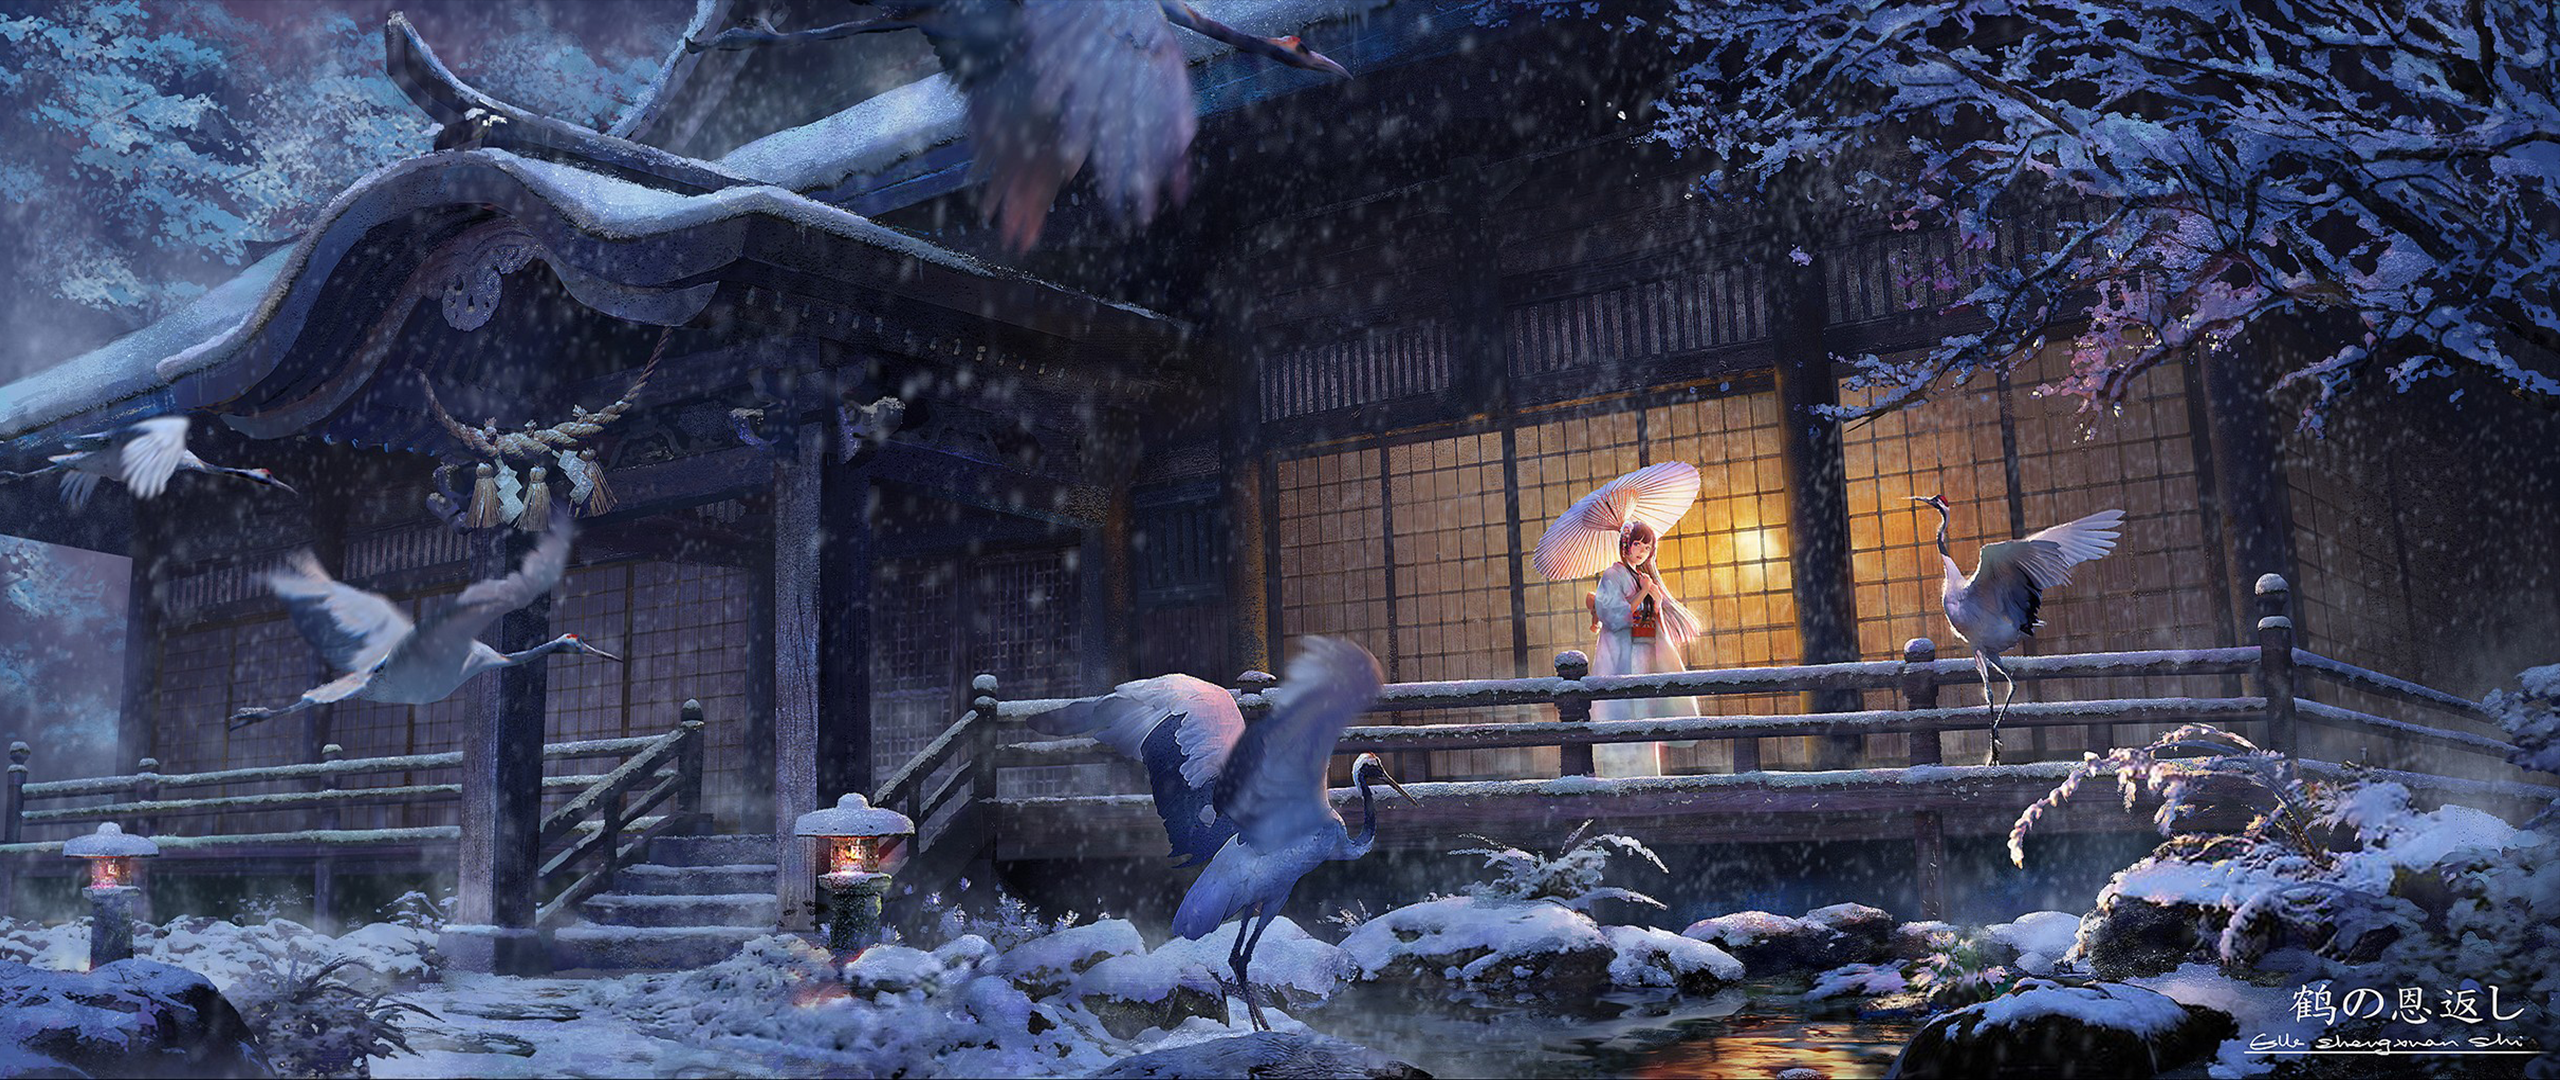 General 2560x1080 ultrawide Japan anime girls birds animals winter artwork Lost Elle